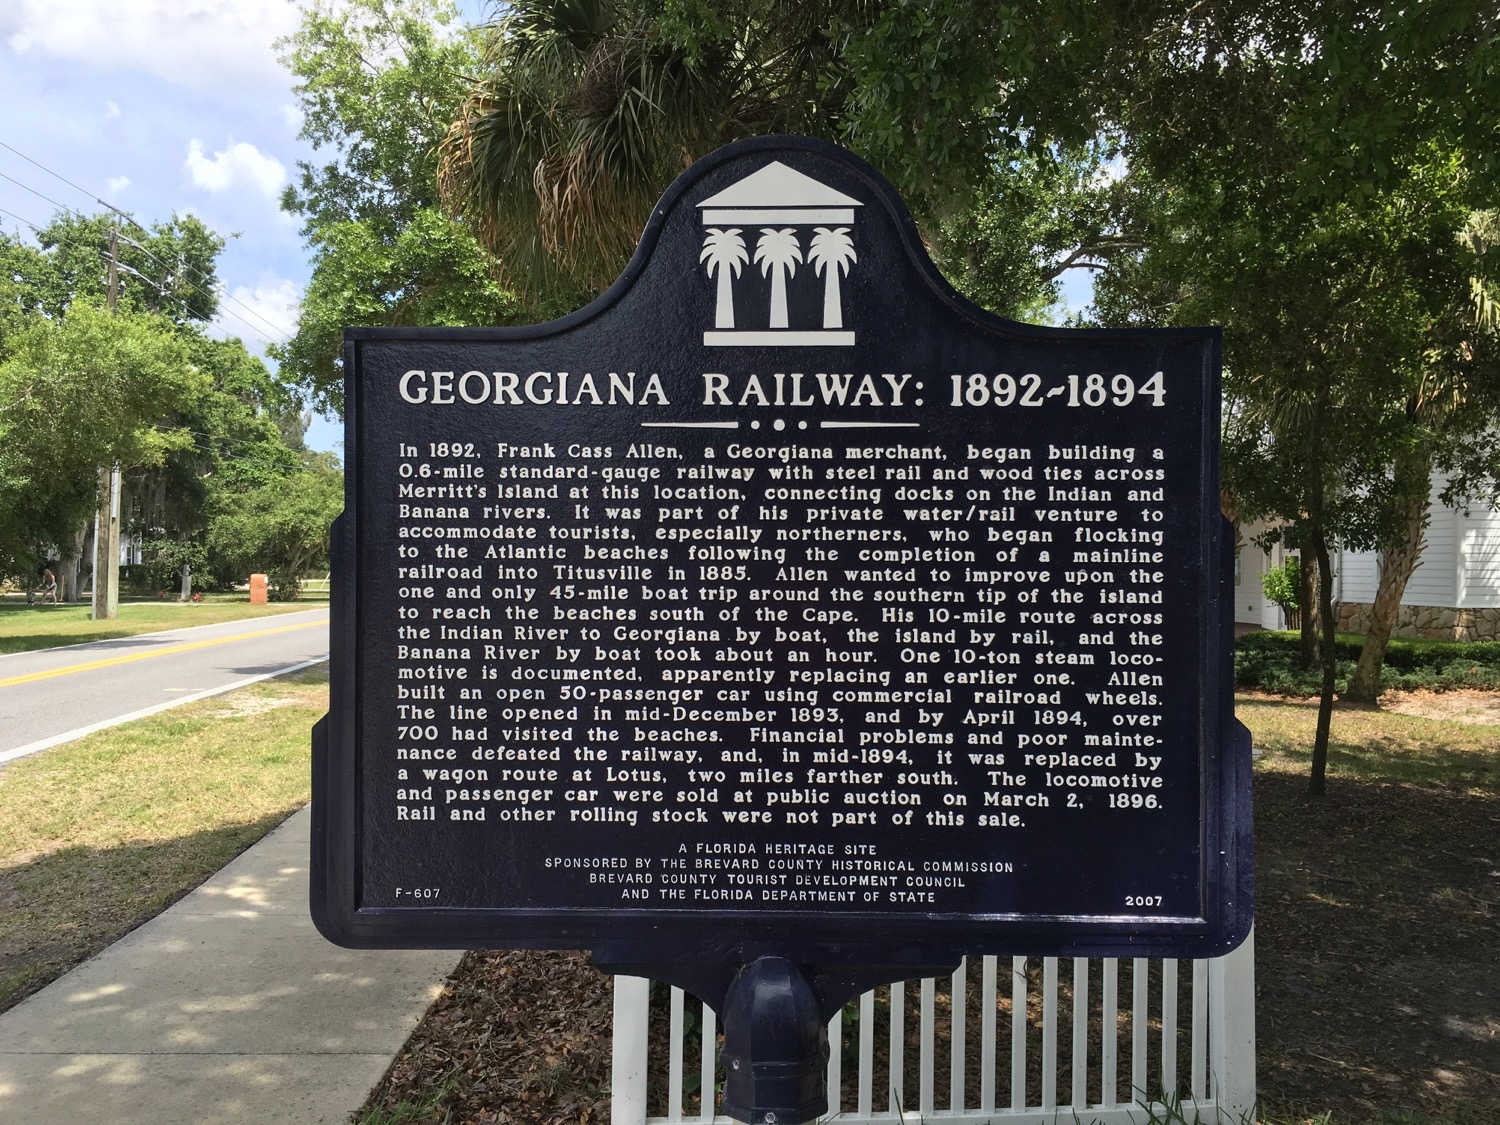 Georgiana Railway: 1892-1894 Marker